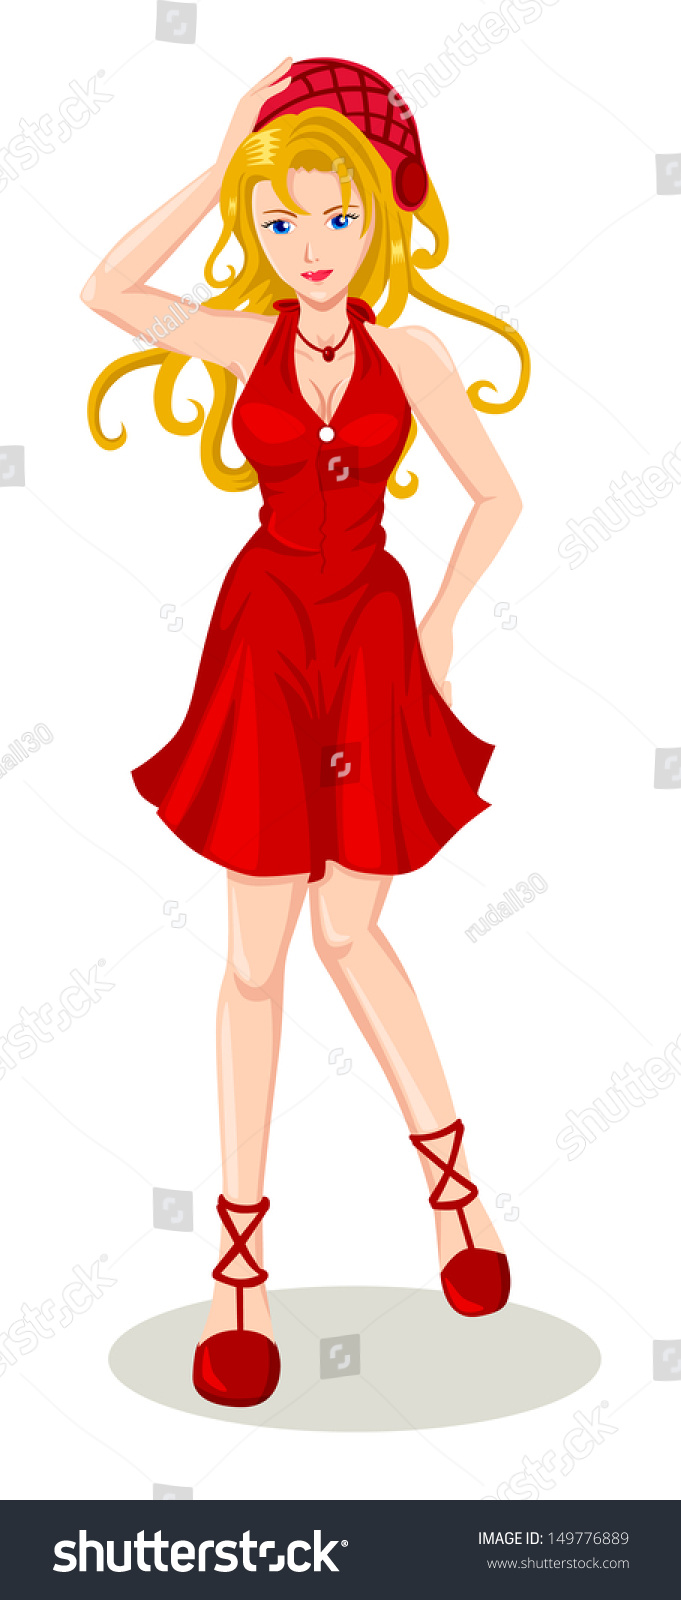 Illustration Of A Girl In Red Dress - 149776889 : Shutterstock